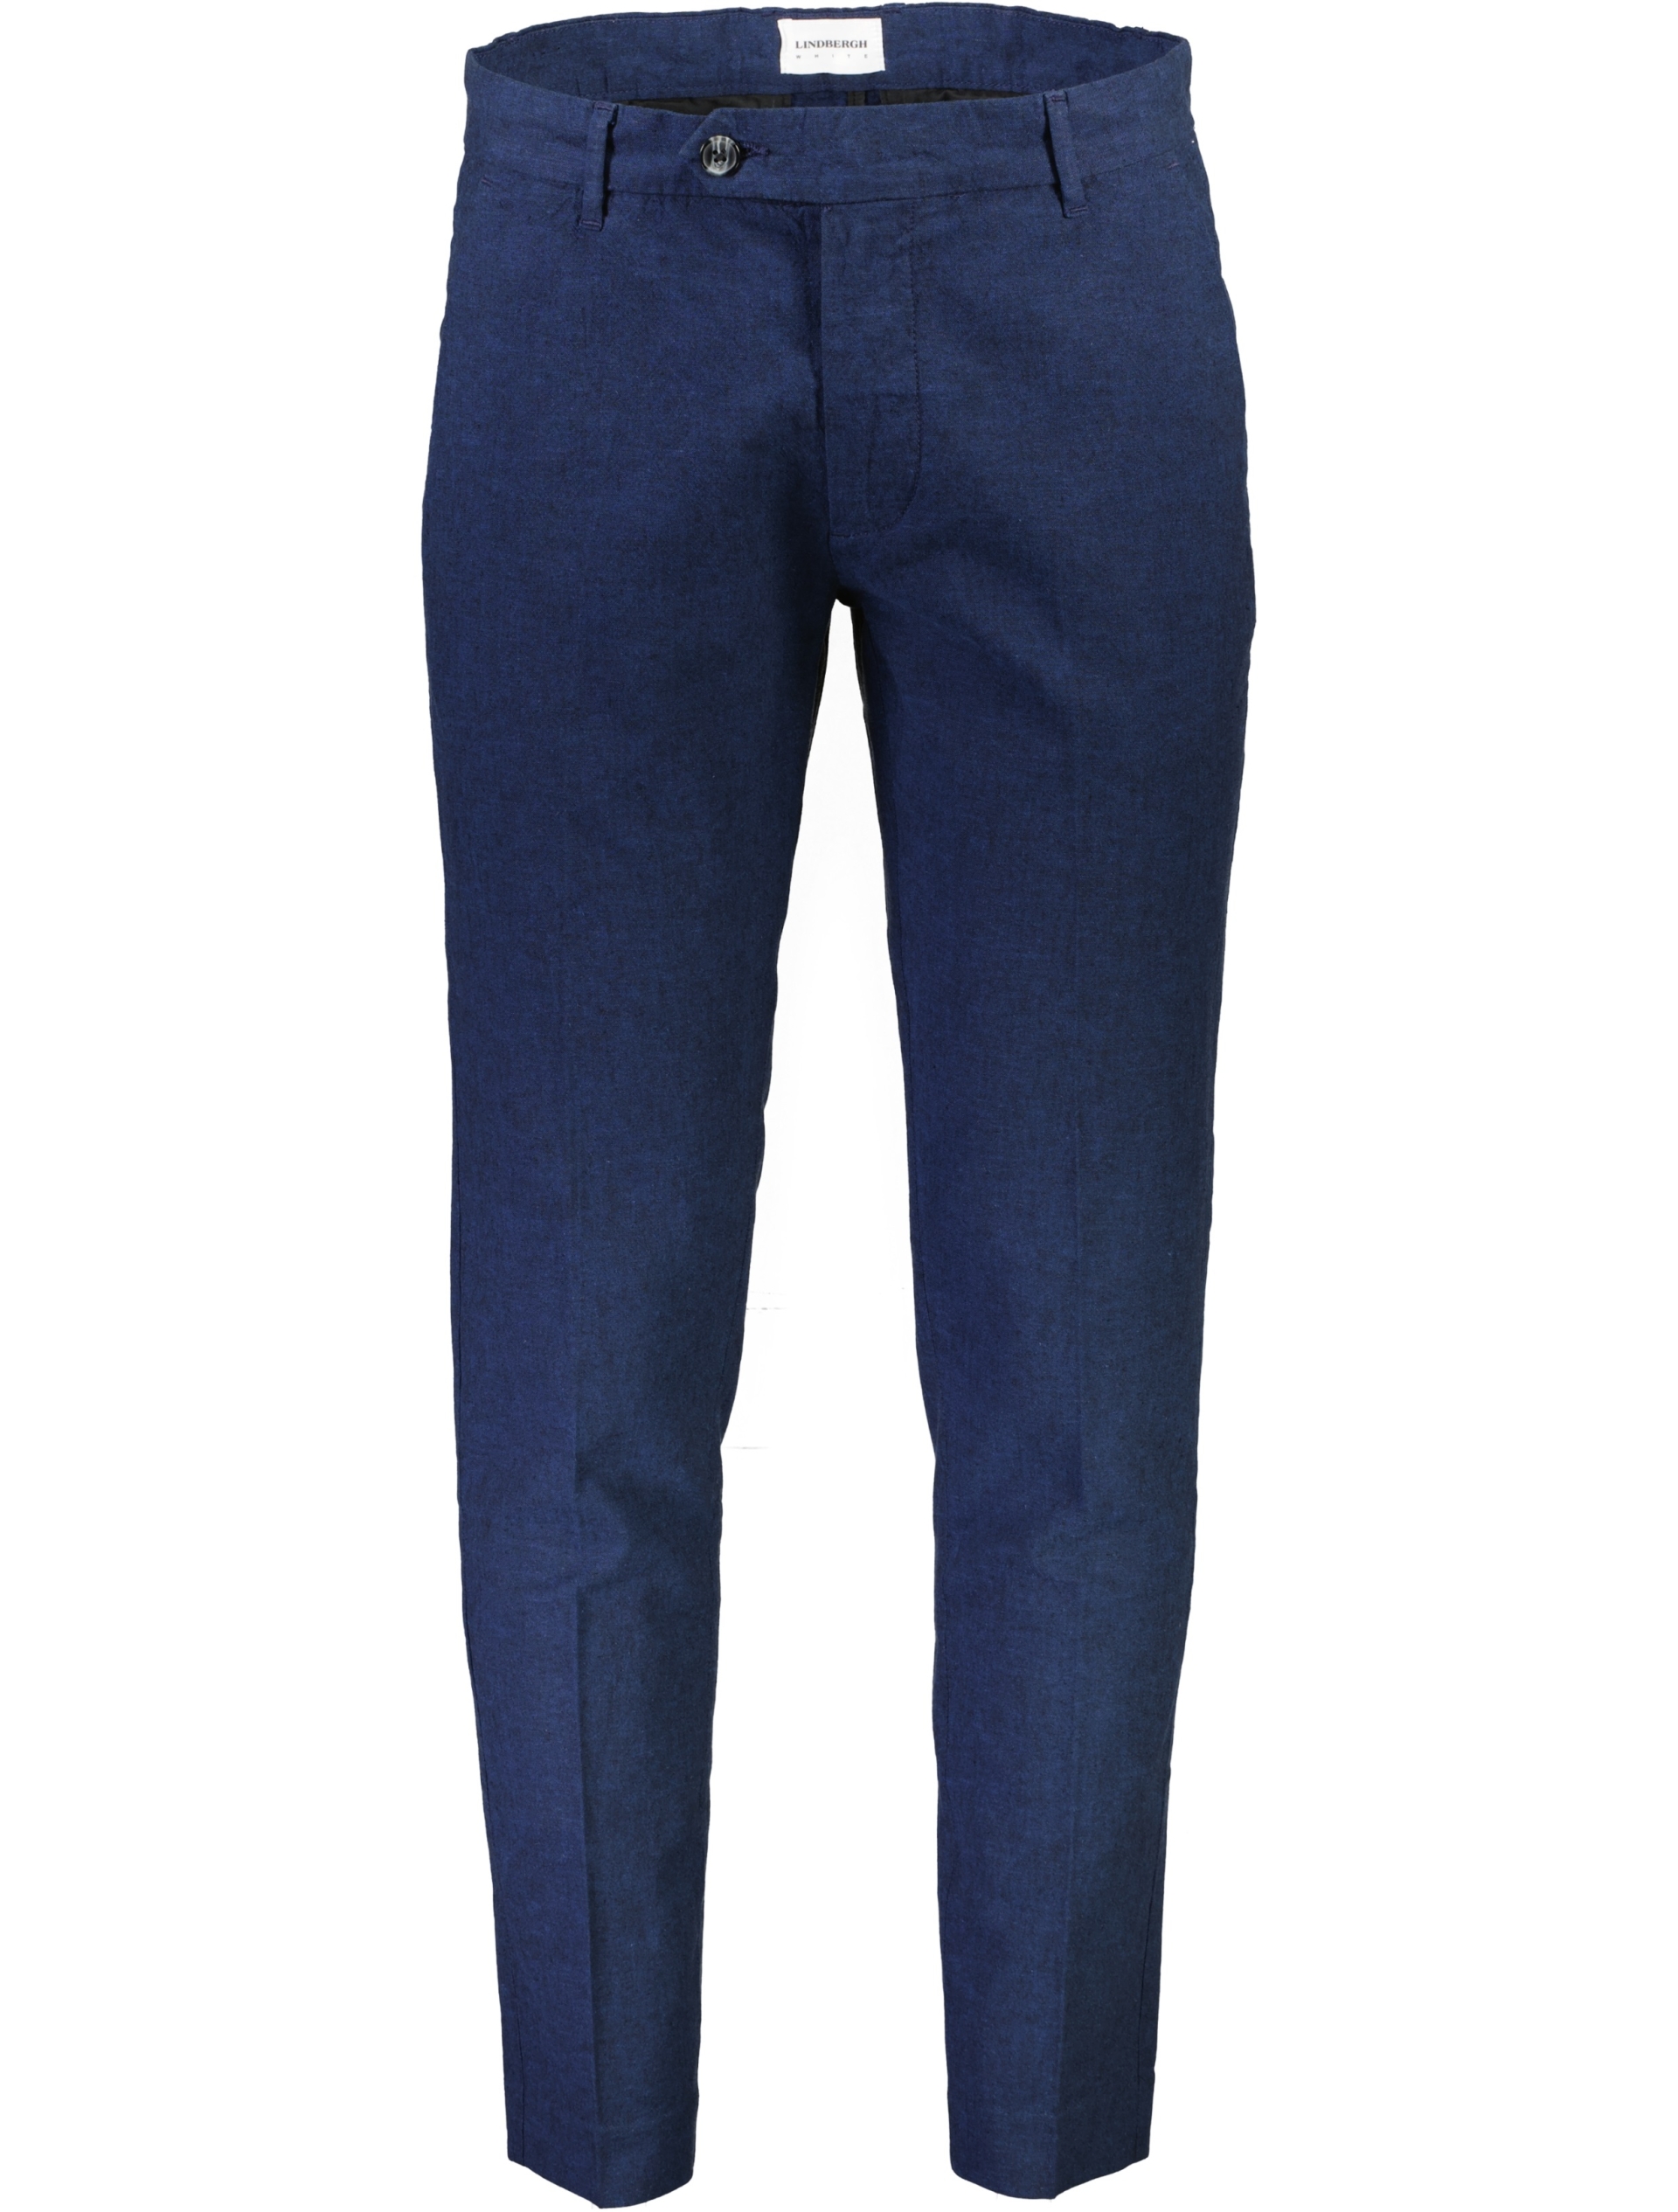 Lindbergh Casual pants blue / dk blue